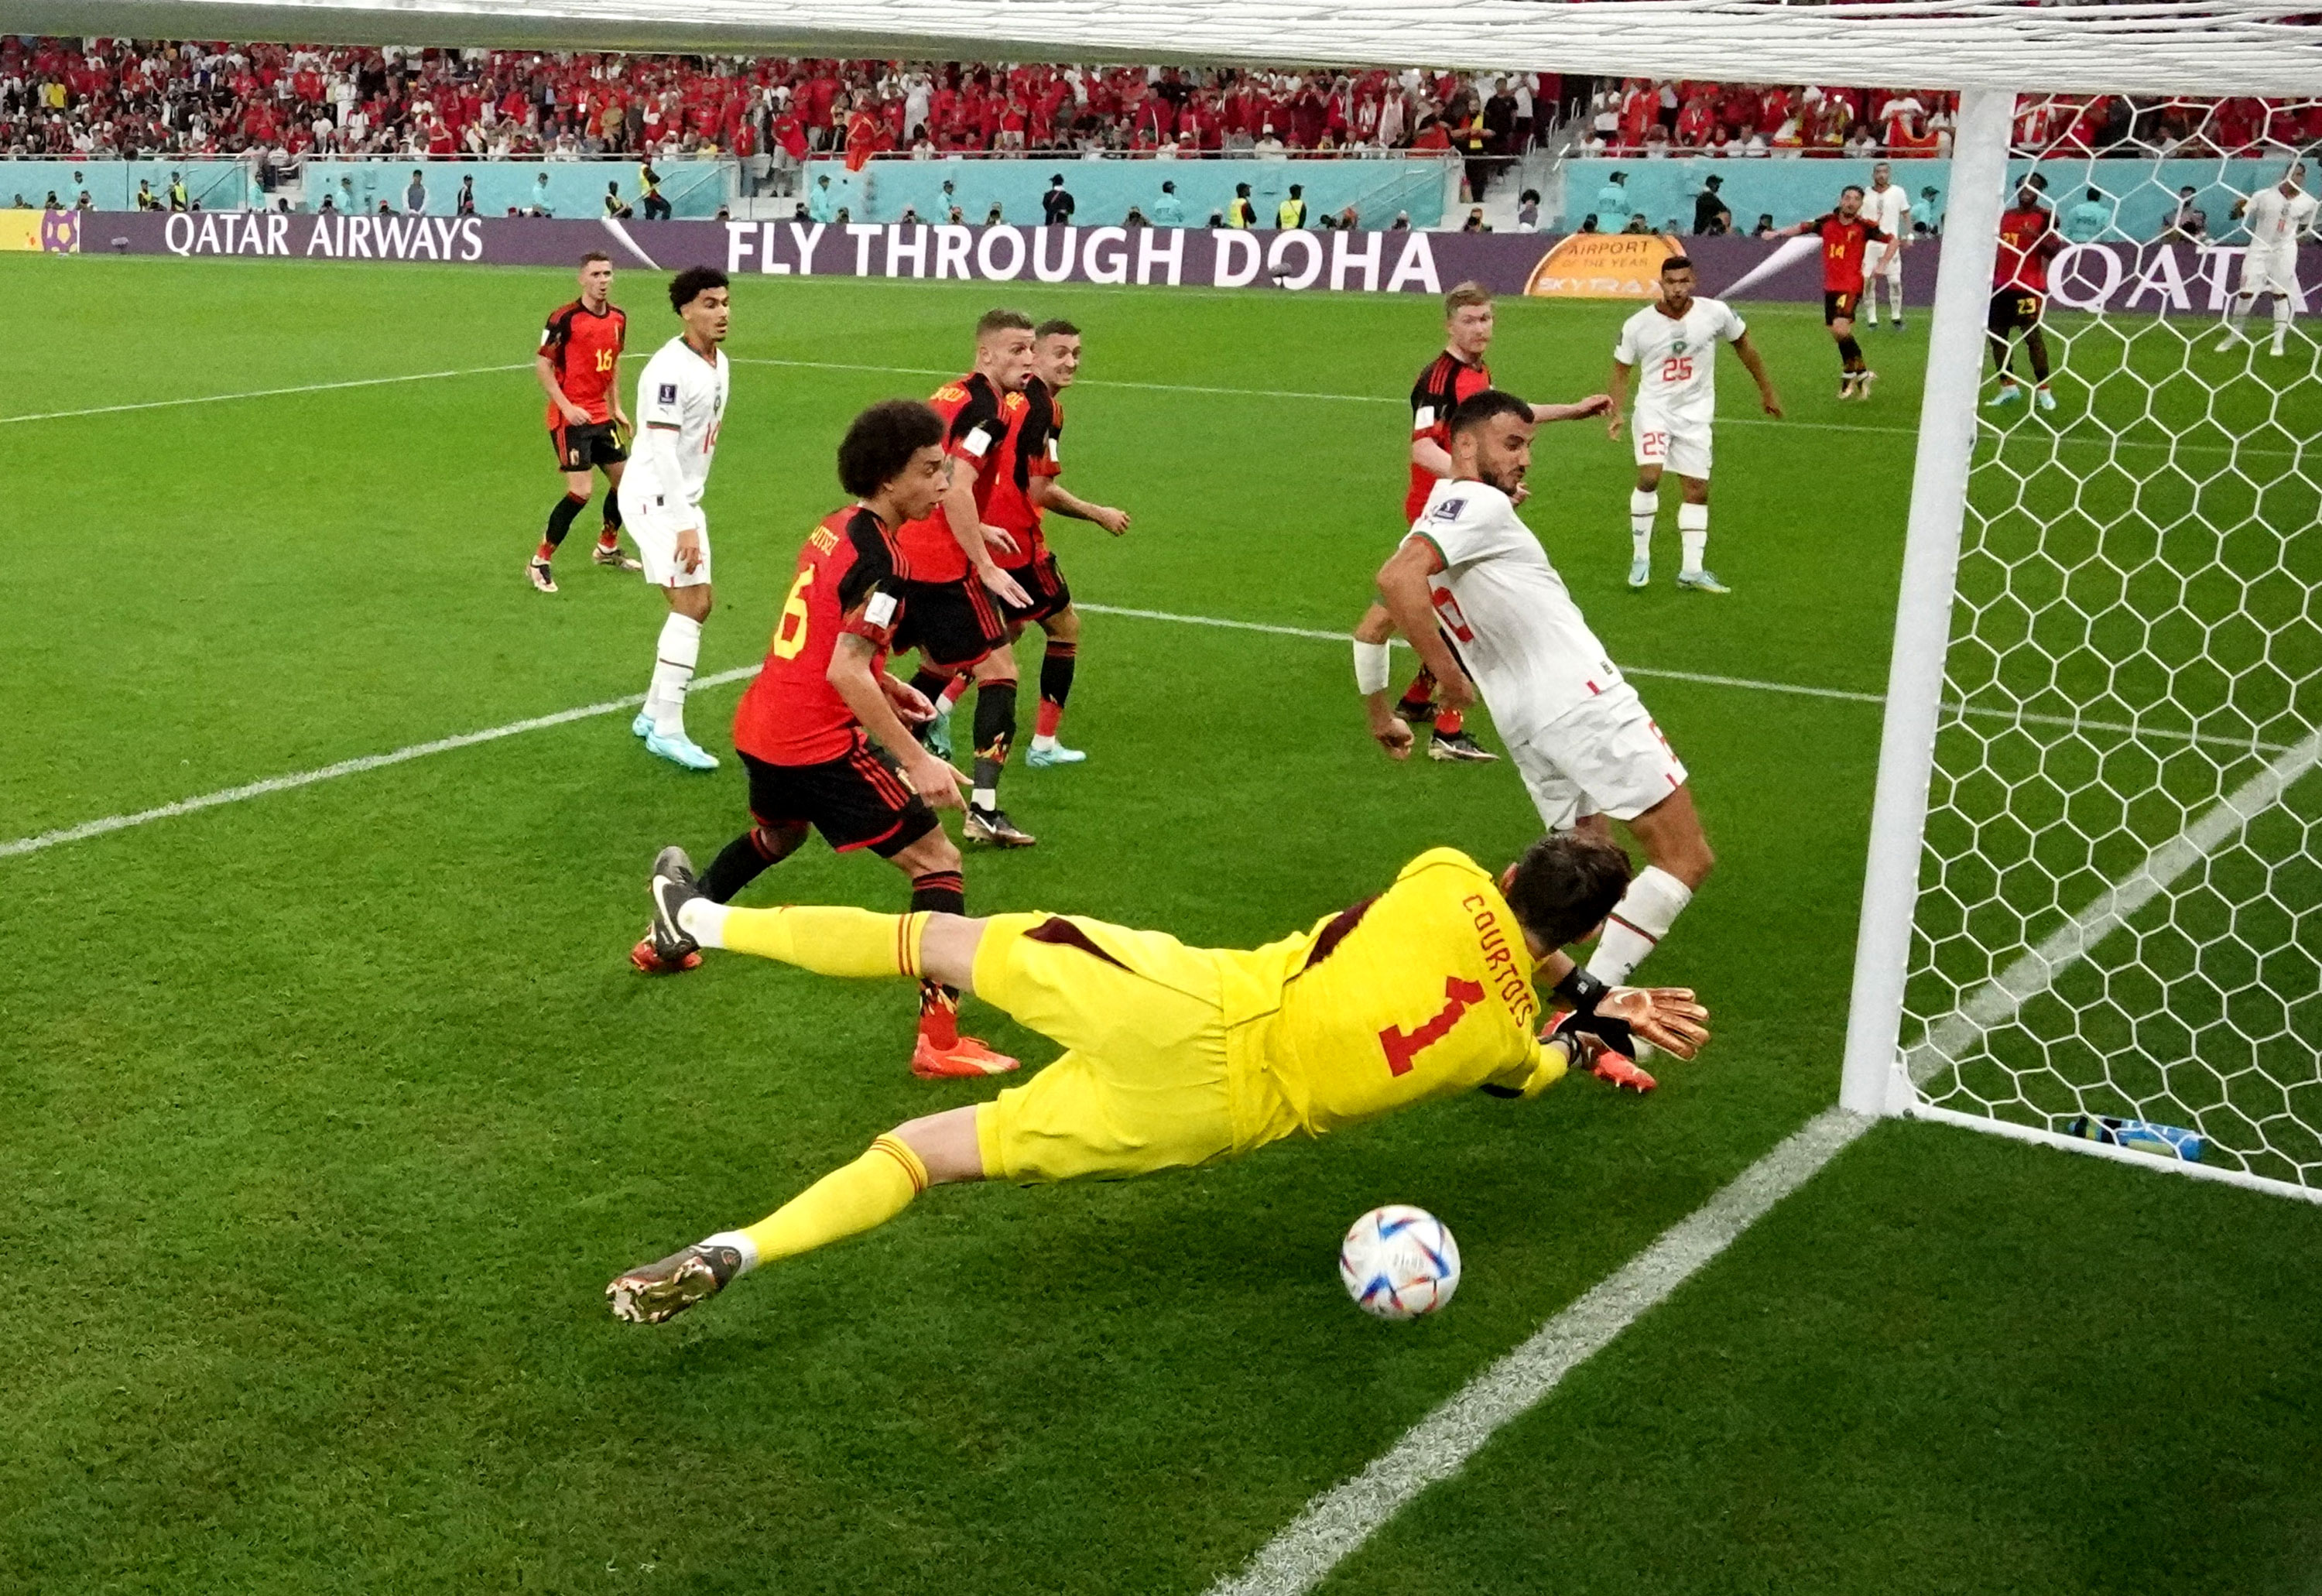 Belgium’s goalkeeper Thibaut Courtois fails to block a shot on goal by Morocco’s Abdelhamid Sabiri.